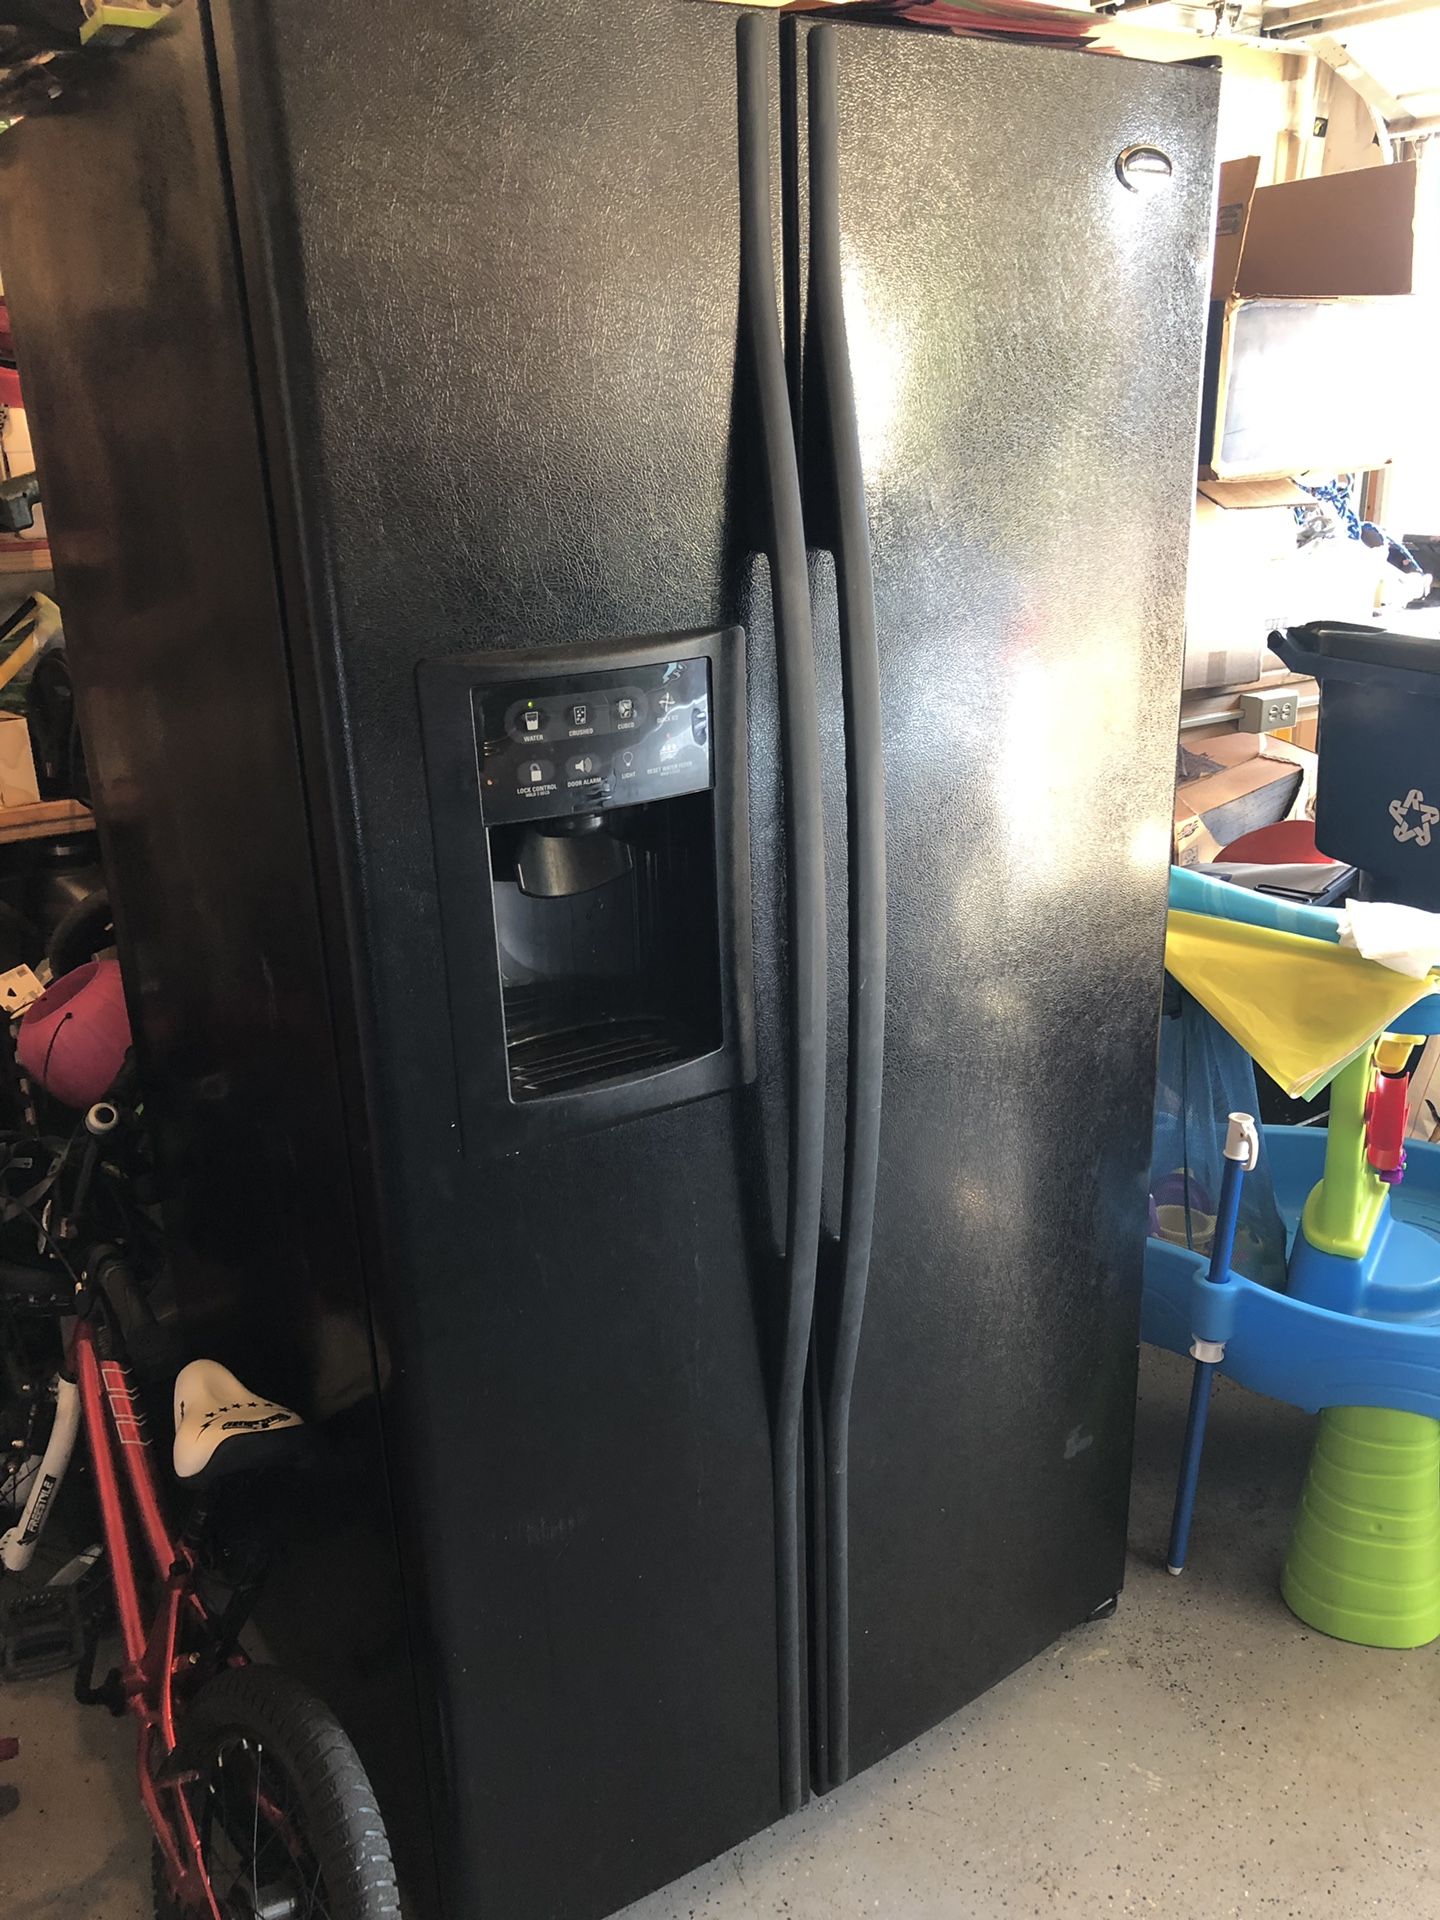 GE profile refrigerator